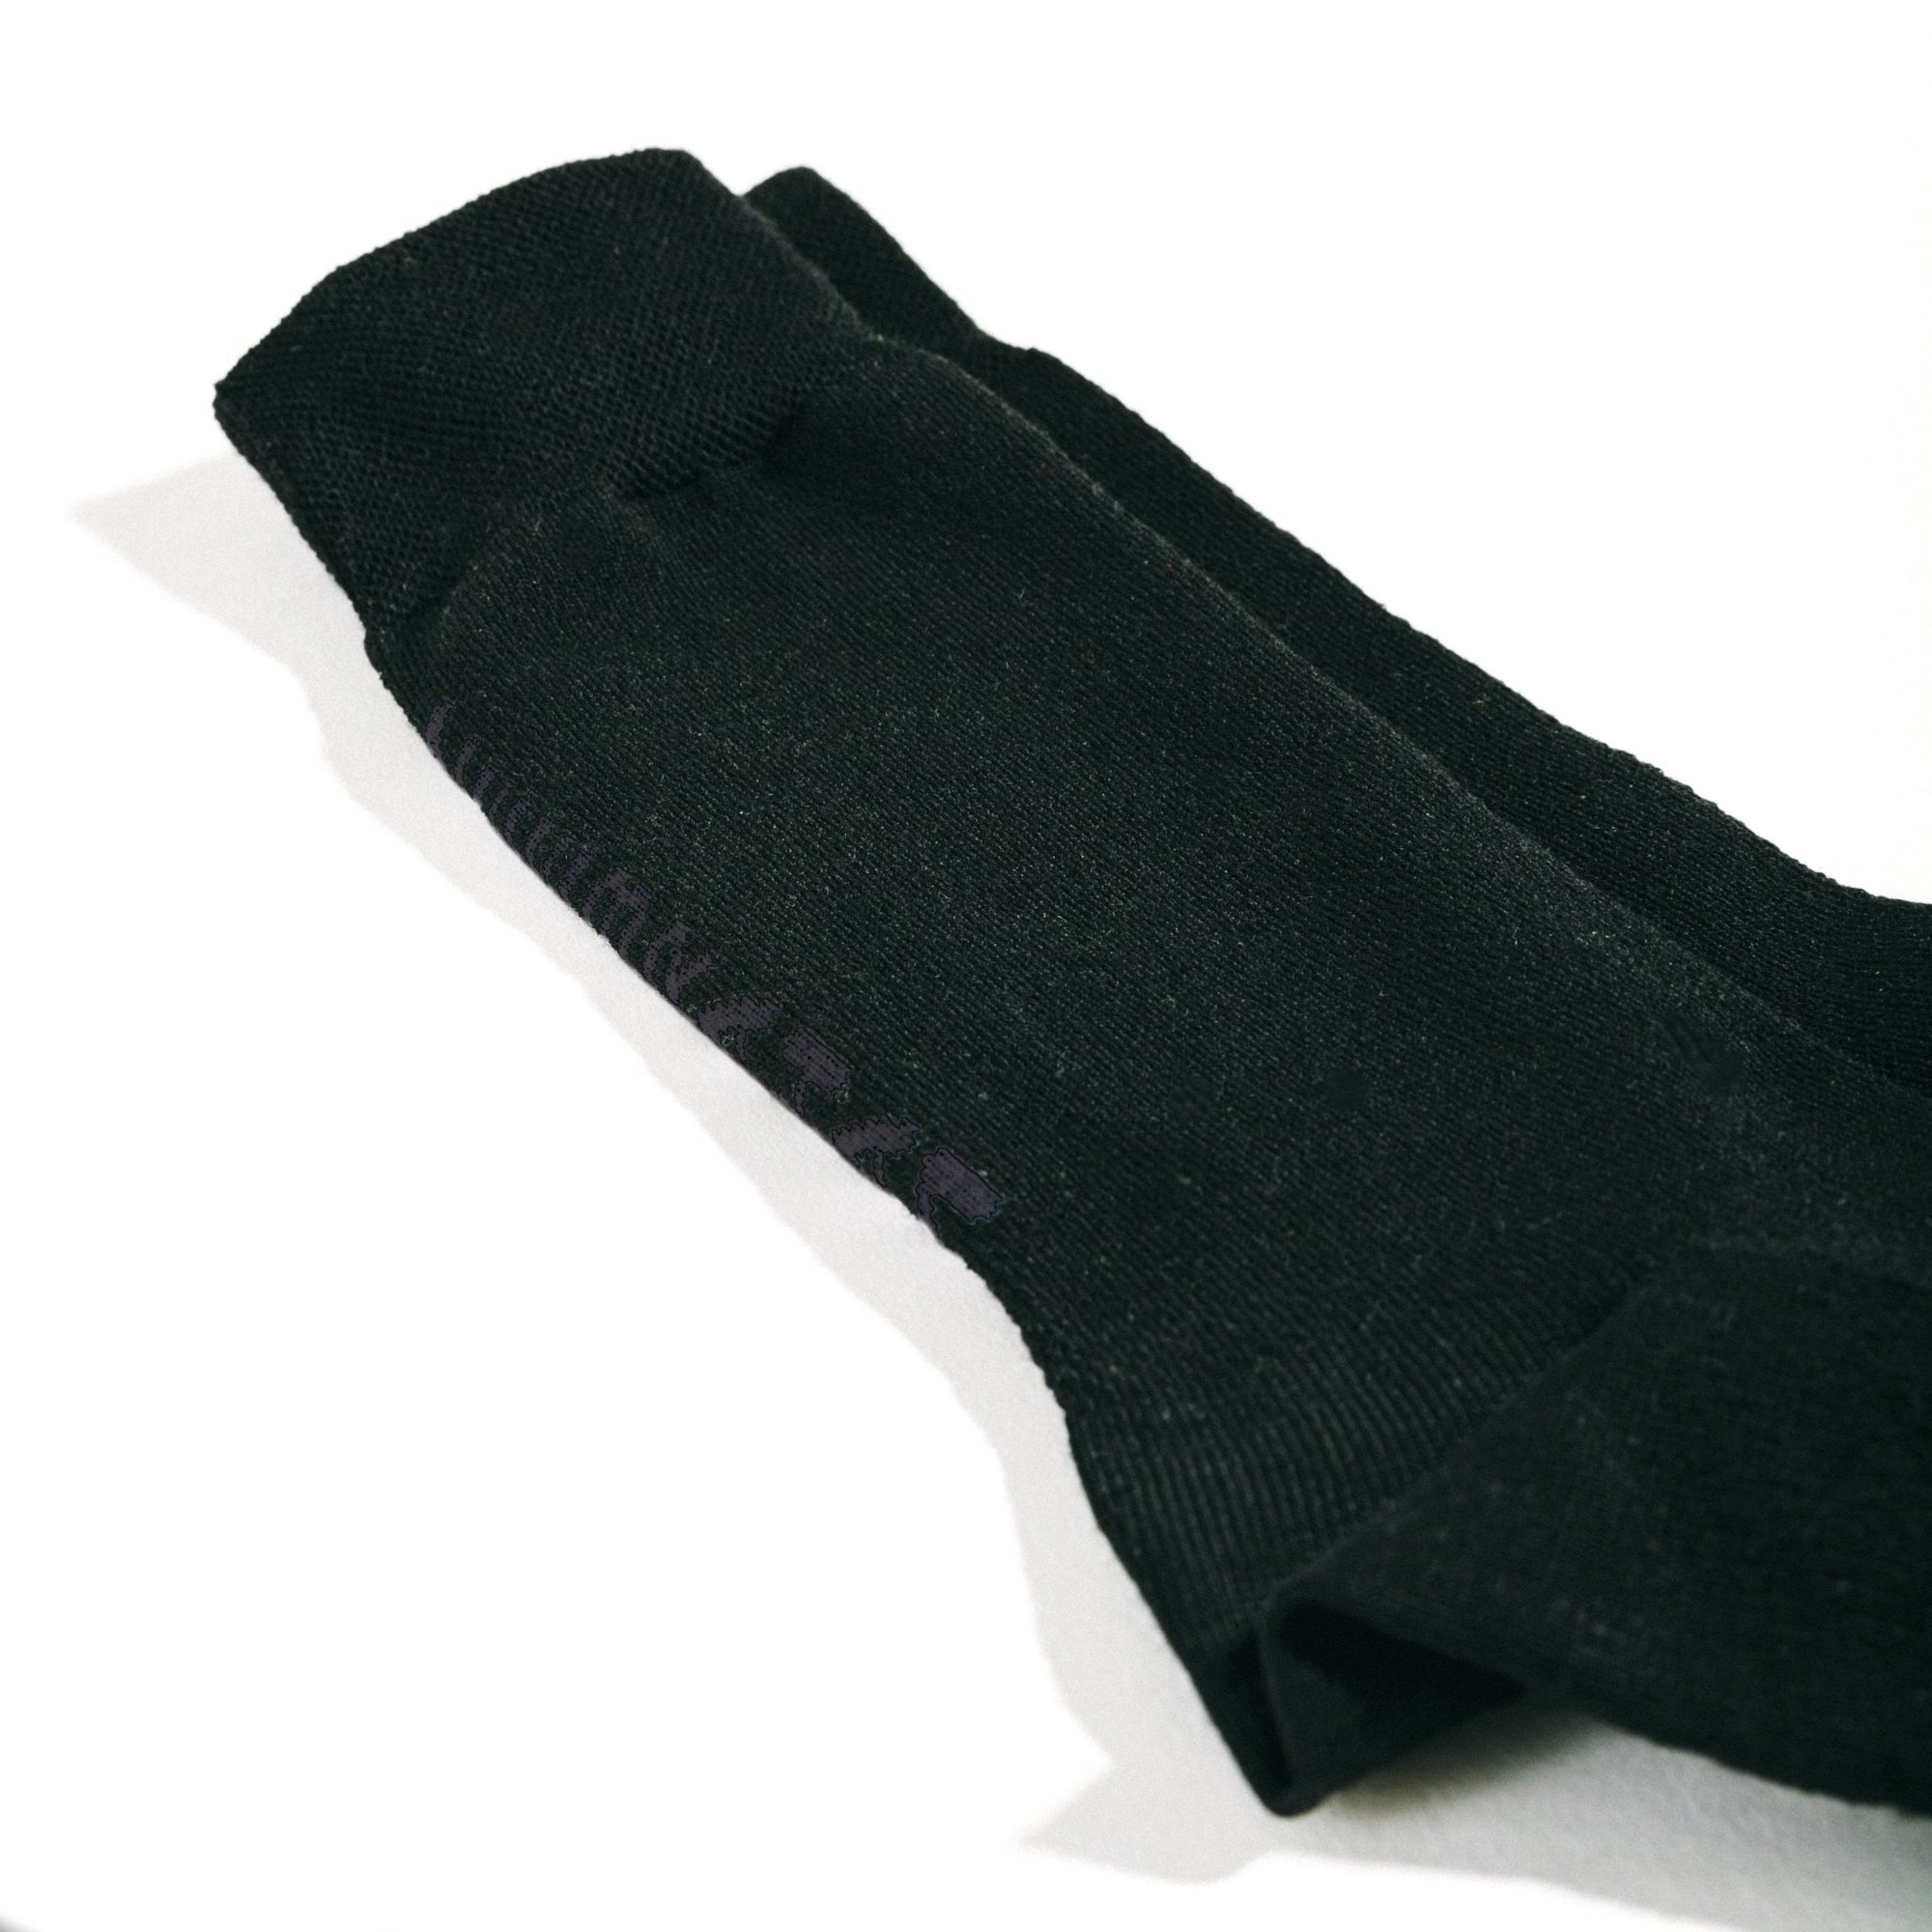 merino socks, flatlay, schwarze merino socken, cycling socken made in germany, stricksocke, schwarz mit schwarzer schrift